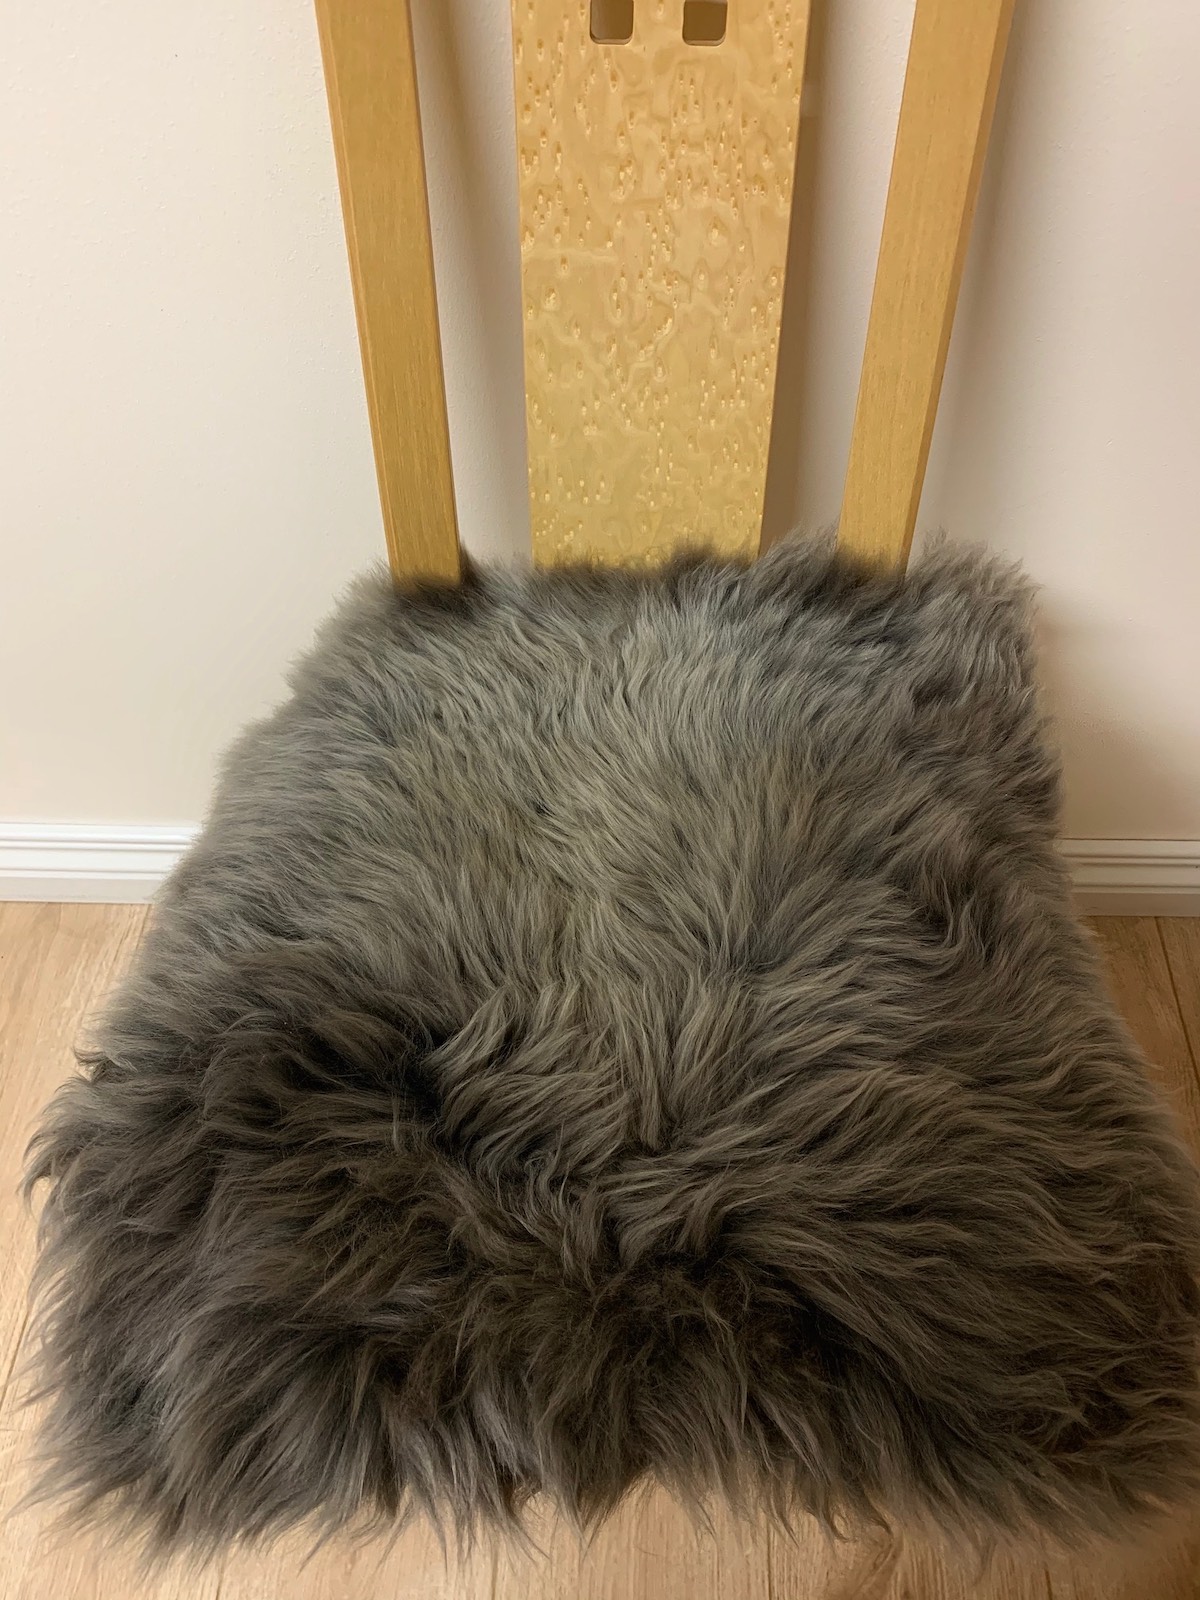 Ruskovilla Home Sheepskins Chair Pad